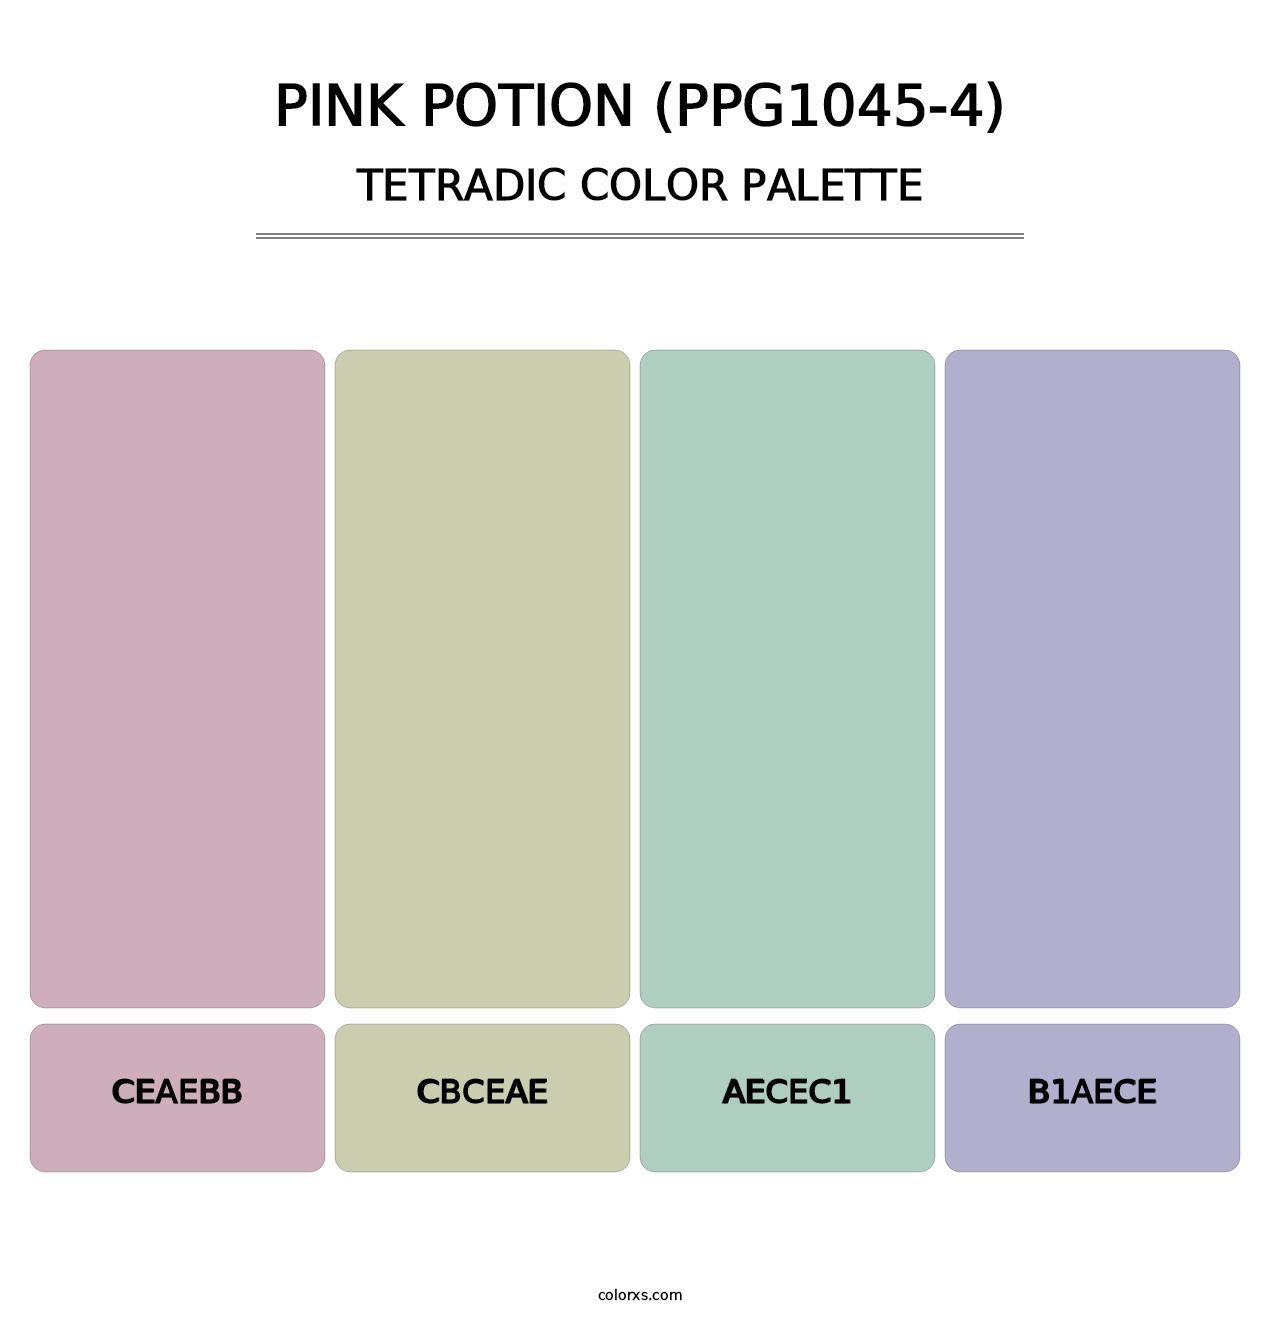 Pink Potion (PPG1045-4) - Tetradic Color Palette